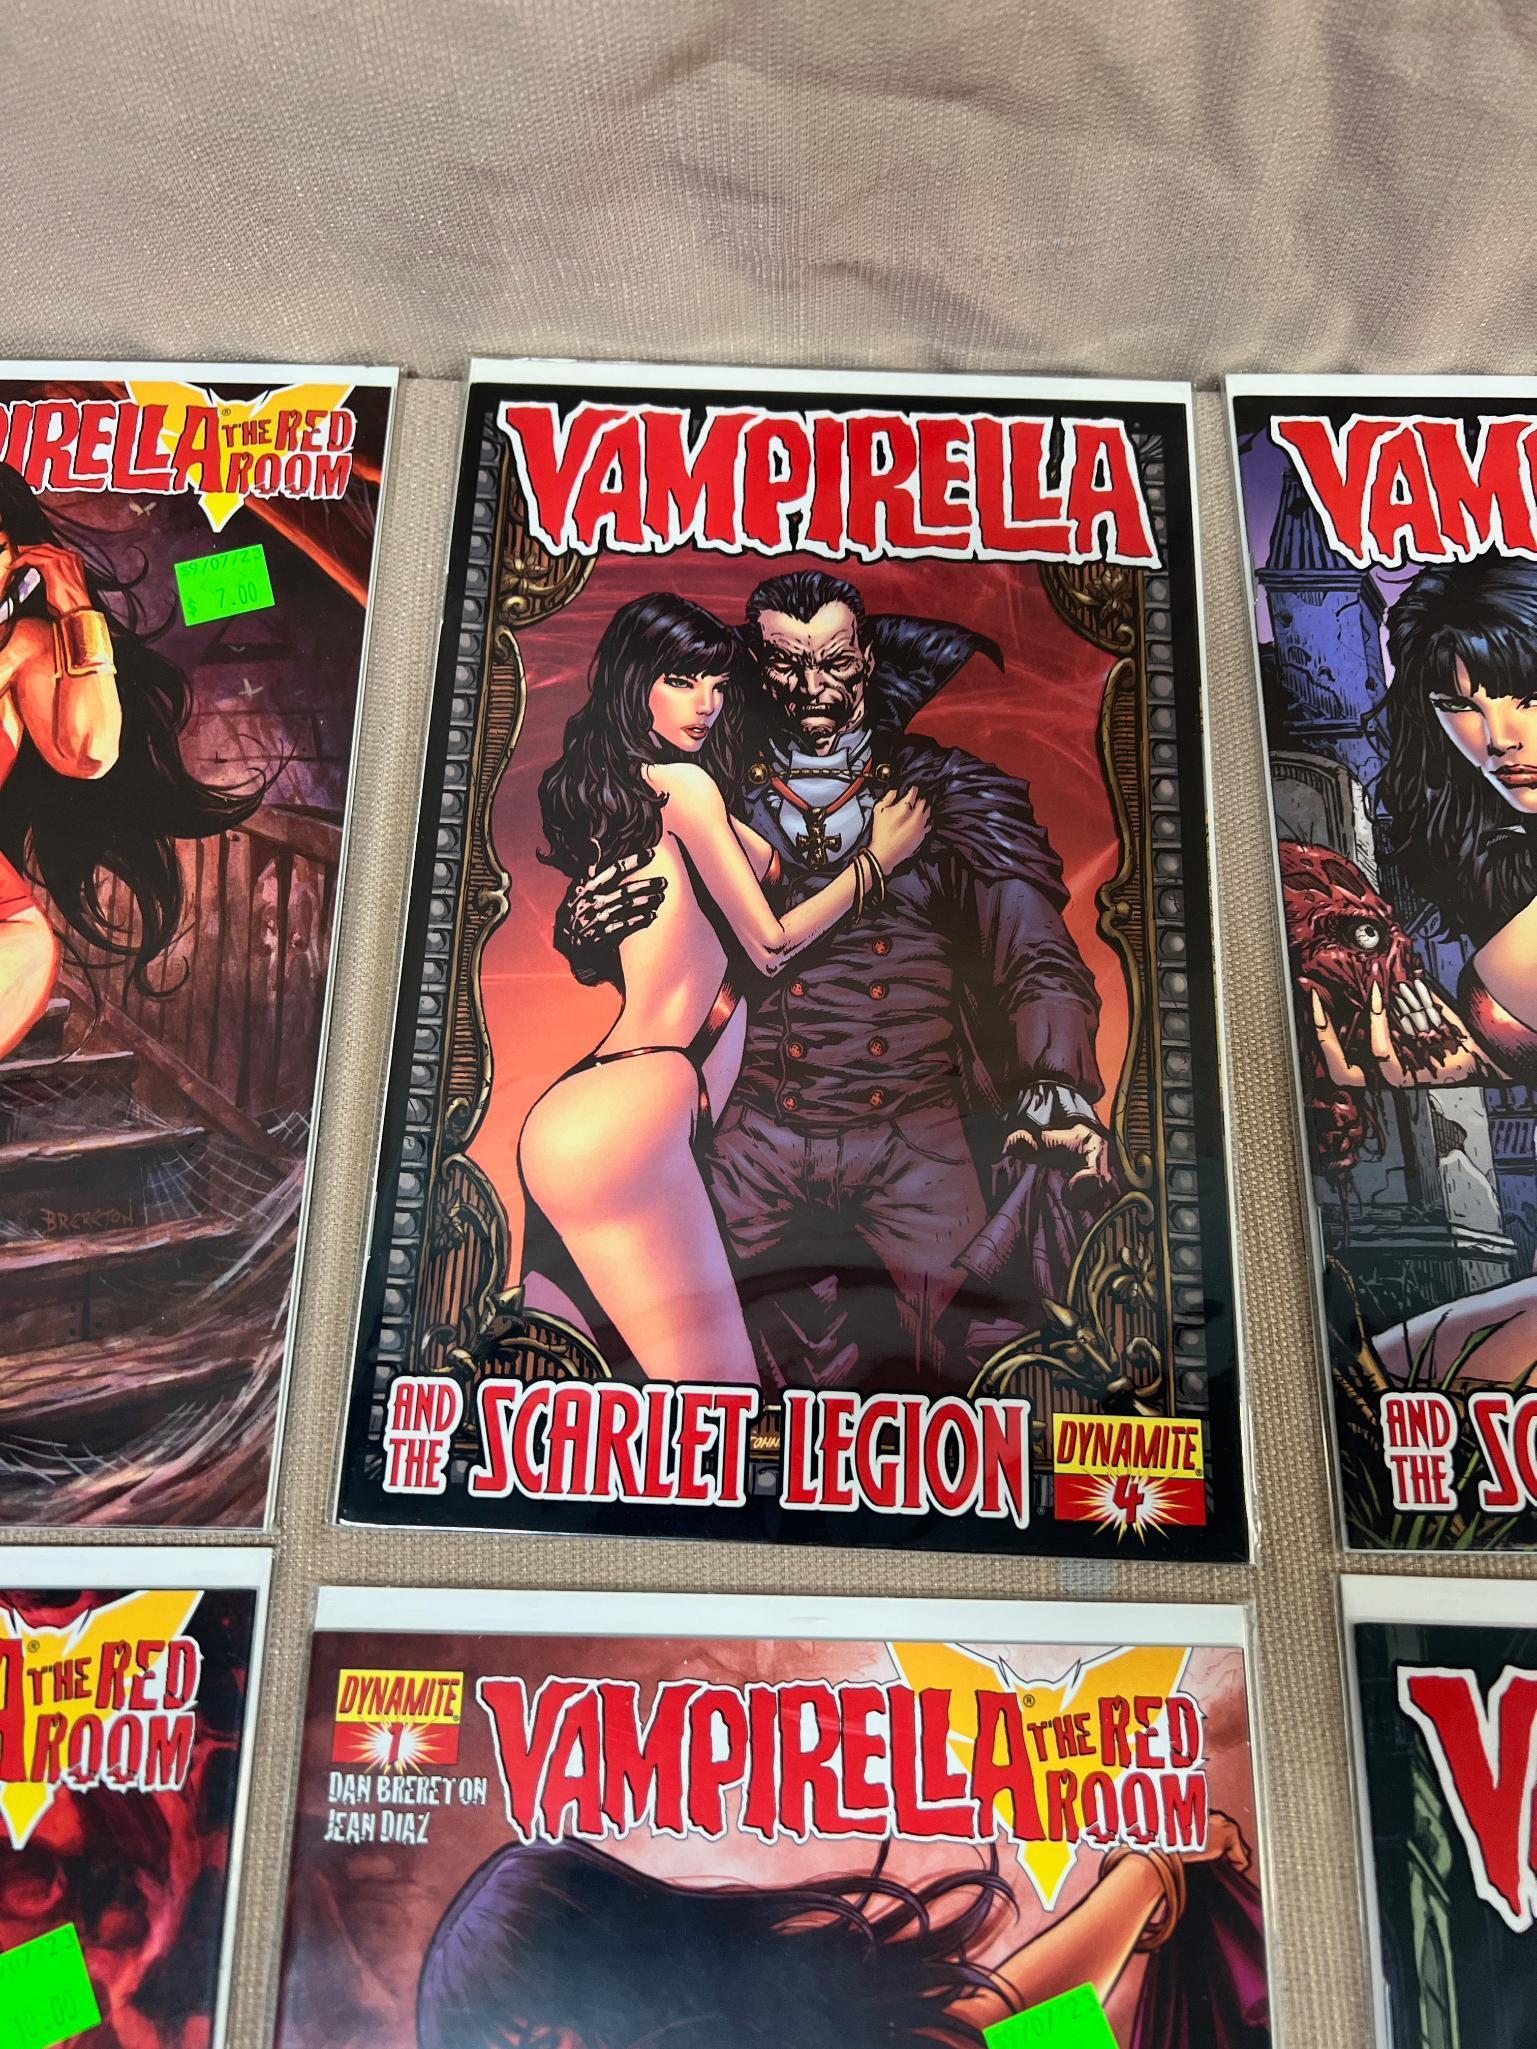 Vampirella Dynamite 1-5 and Red Room 1-4